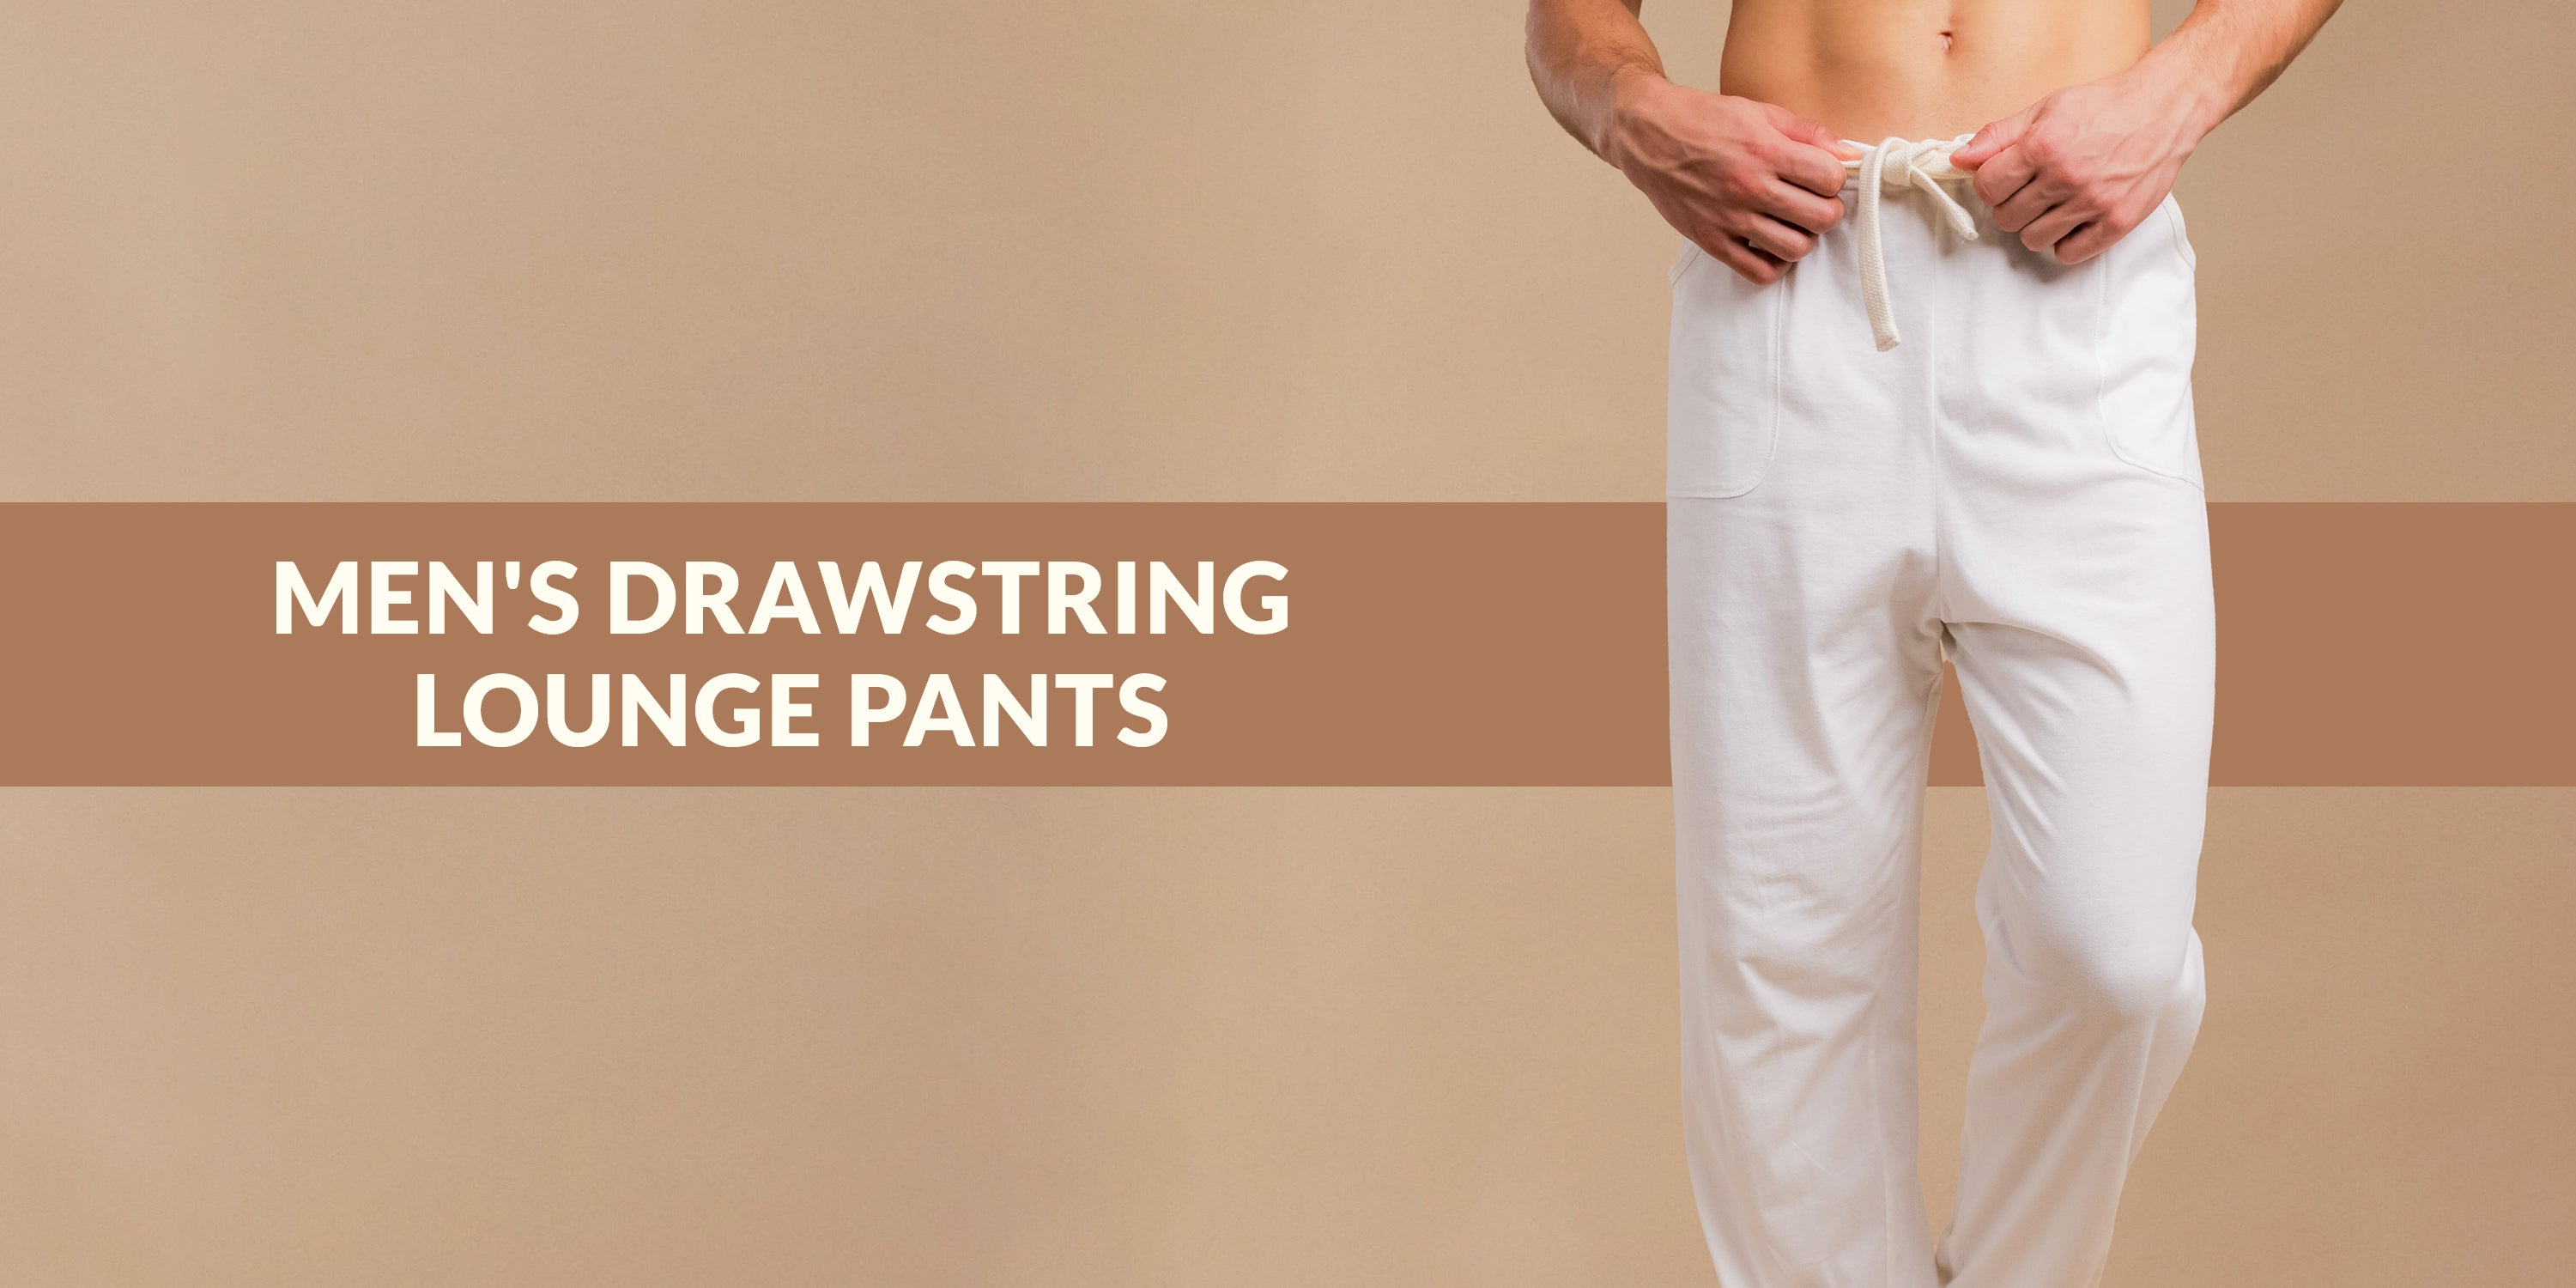 hypoallergenic drawstring lounge pants for men